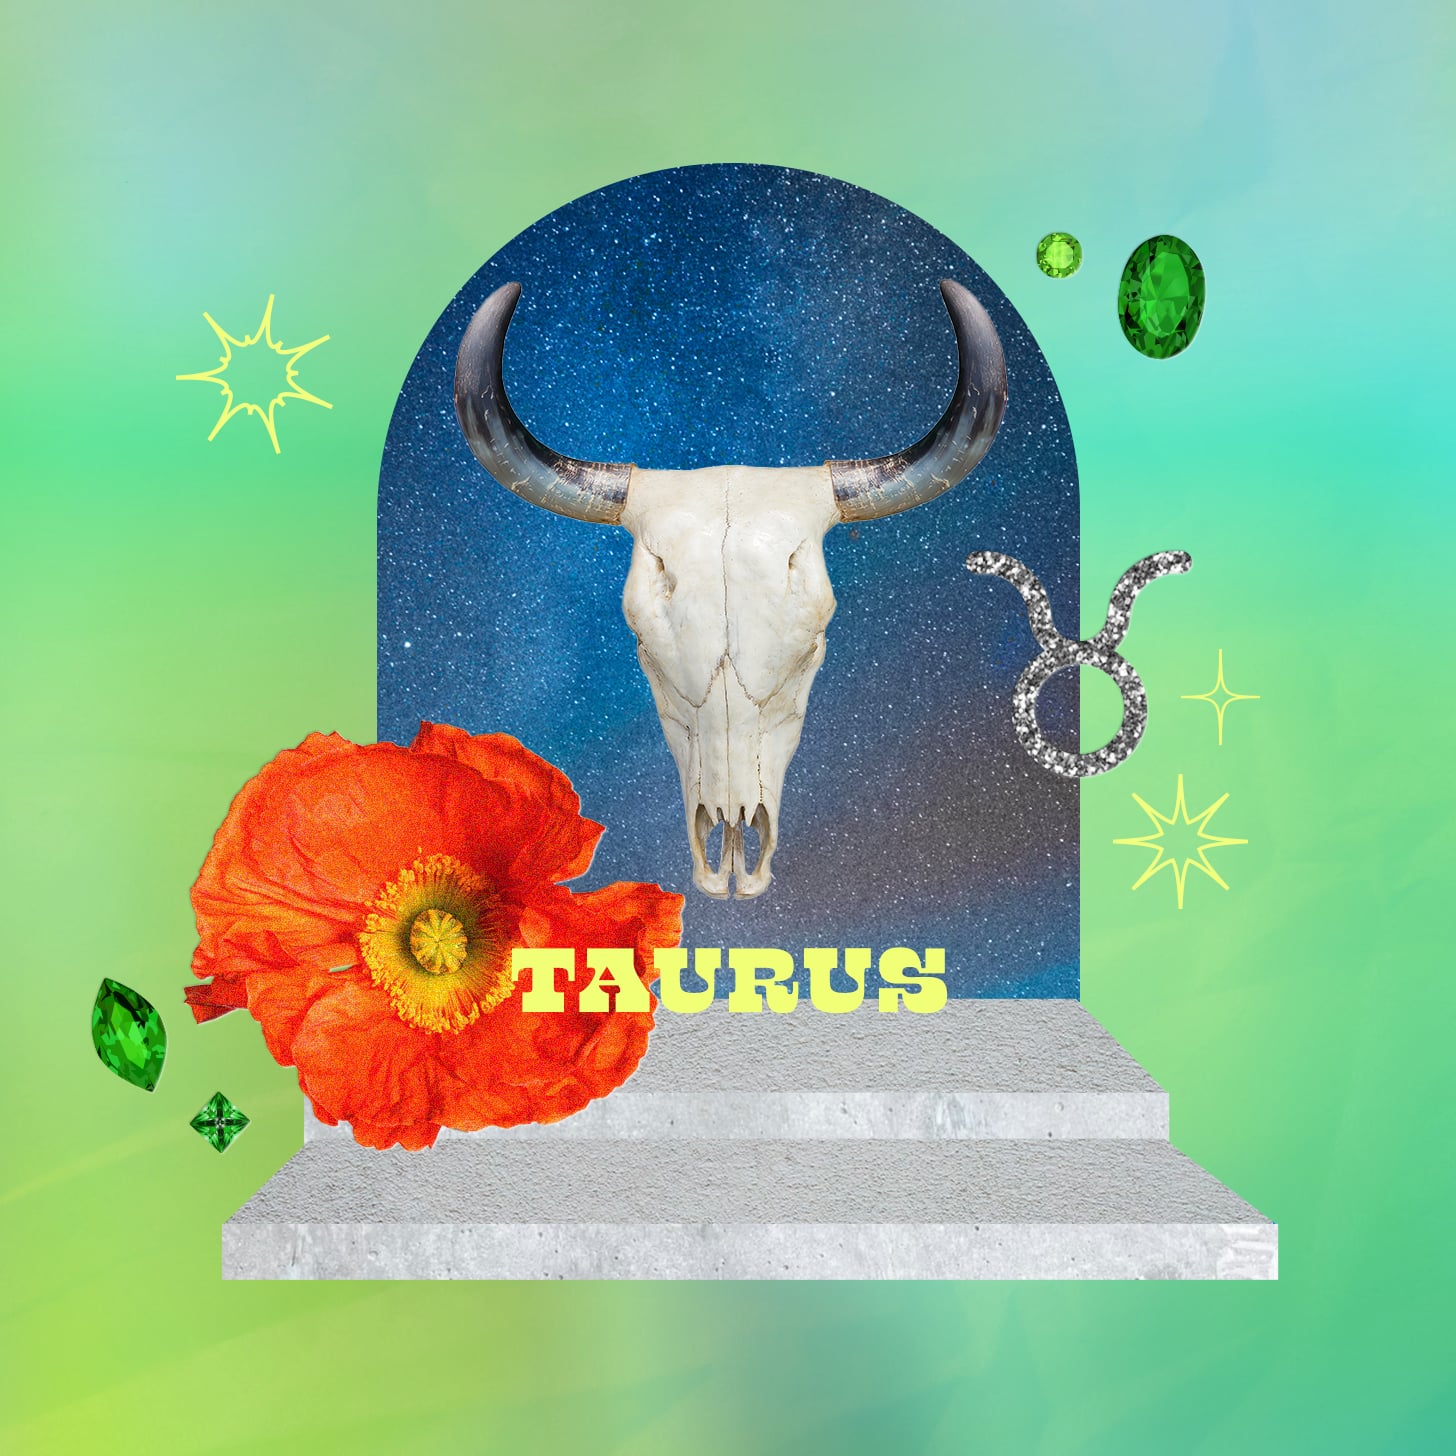 Taurus weekly horoscope for July 31, 2022